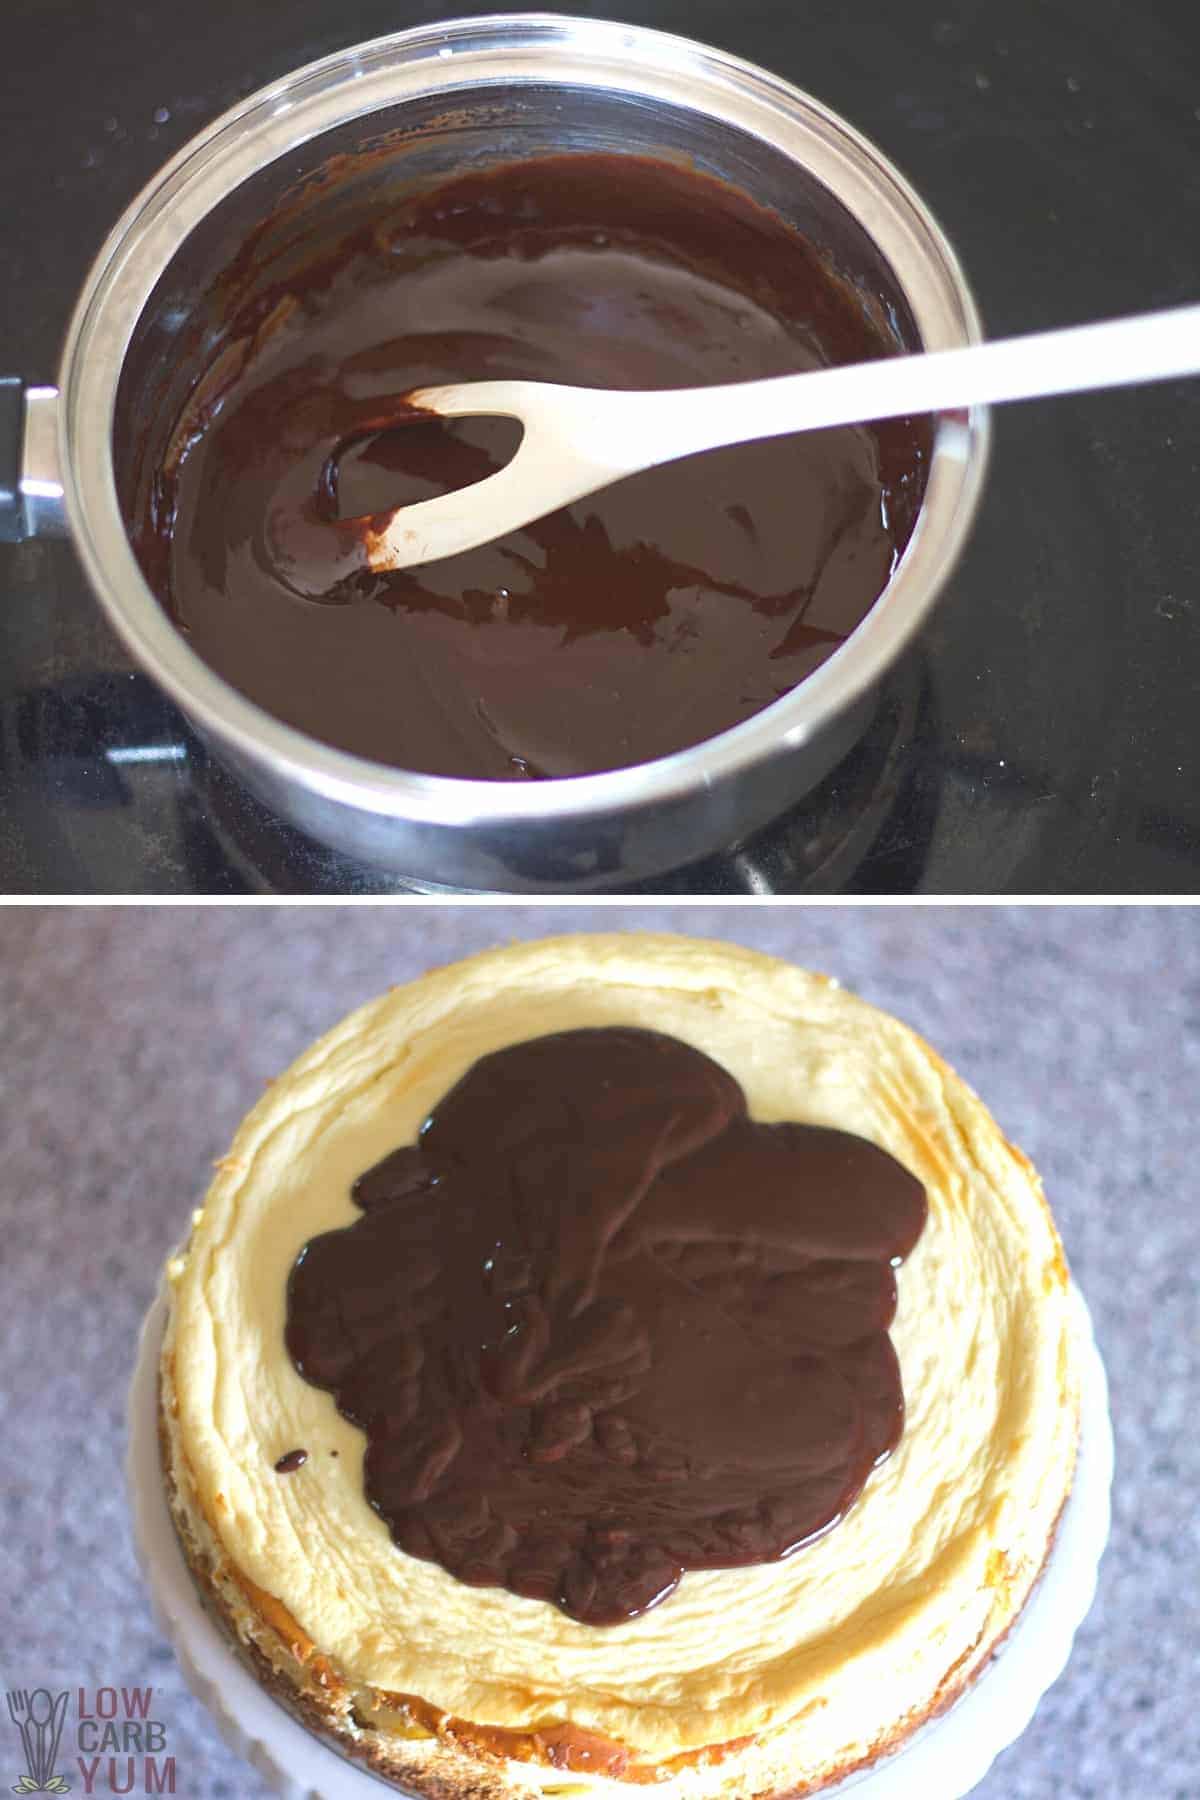 adding the chocolate glaze